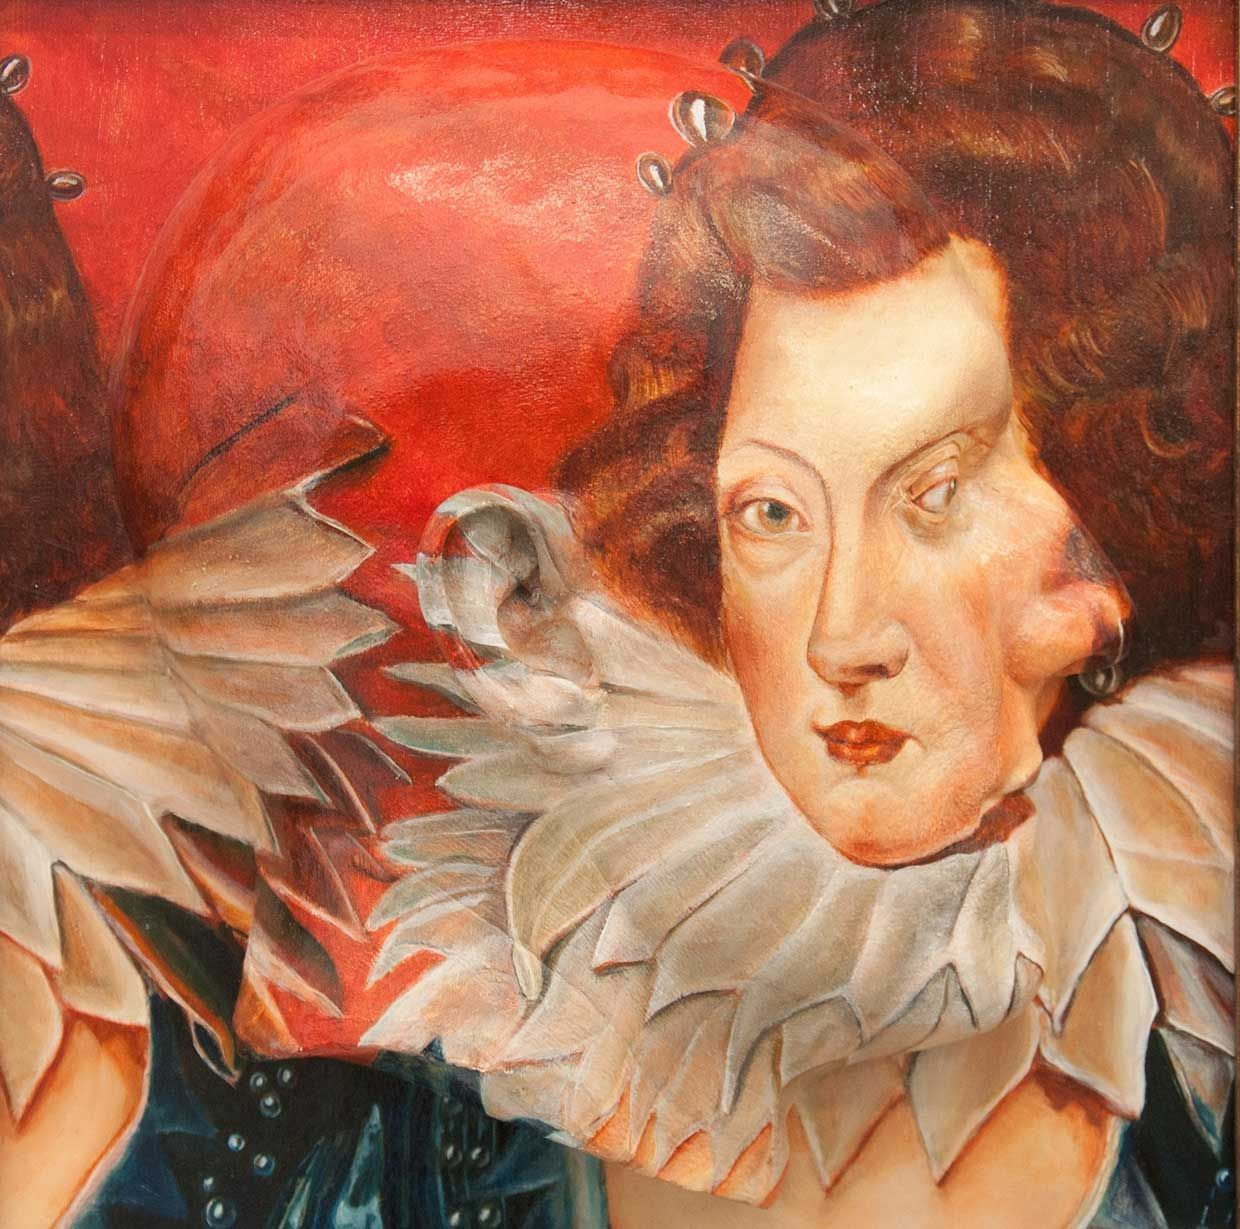 Marie Medici after Rubens